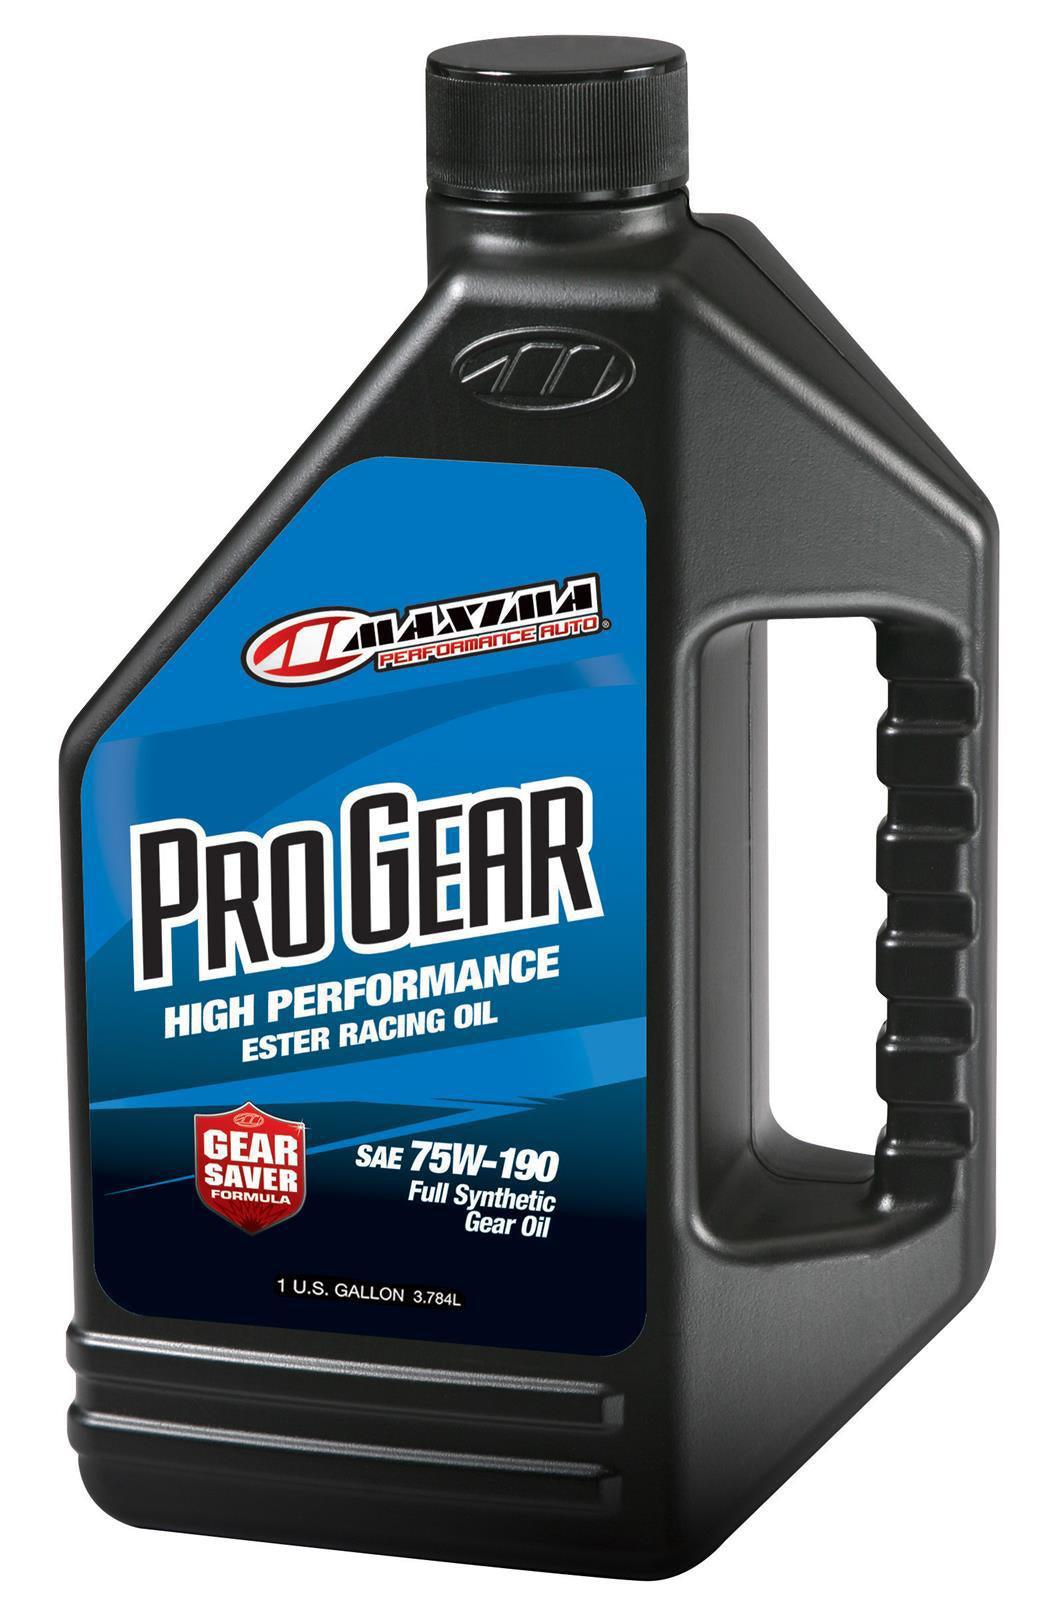 Pro Gear 75w190 Gear Oil 1 Gallon - Burlile Performance Products